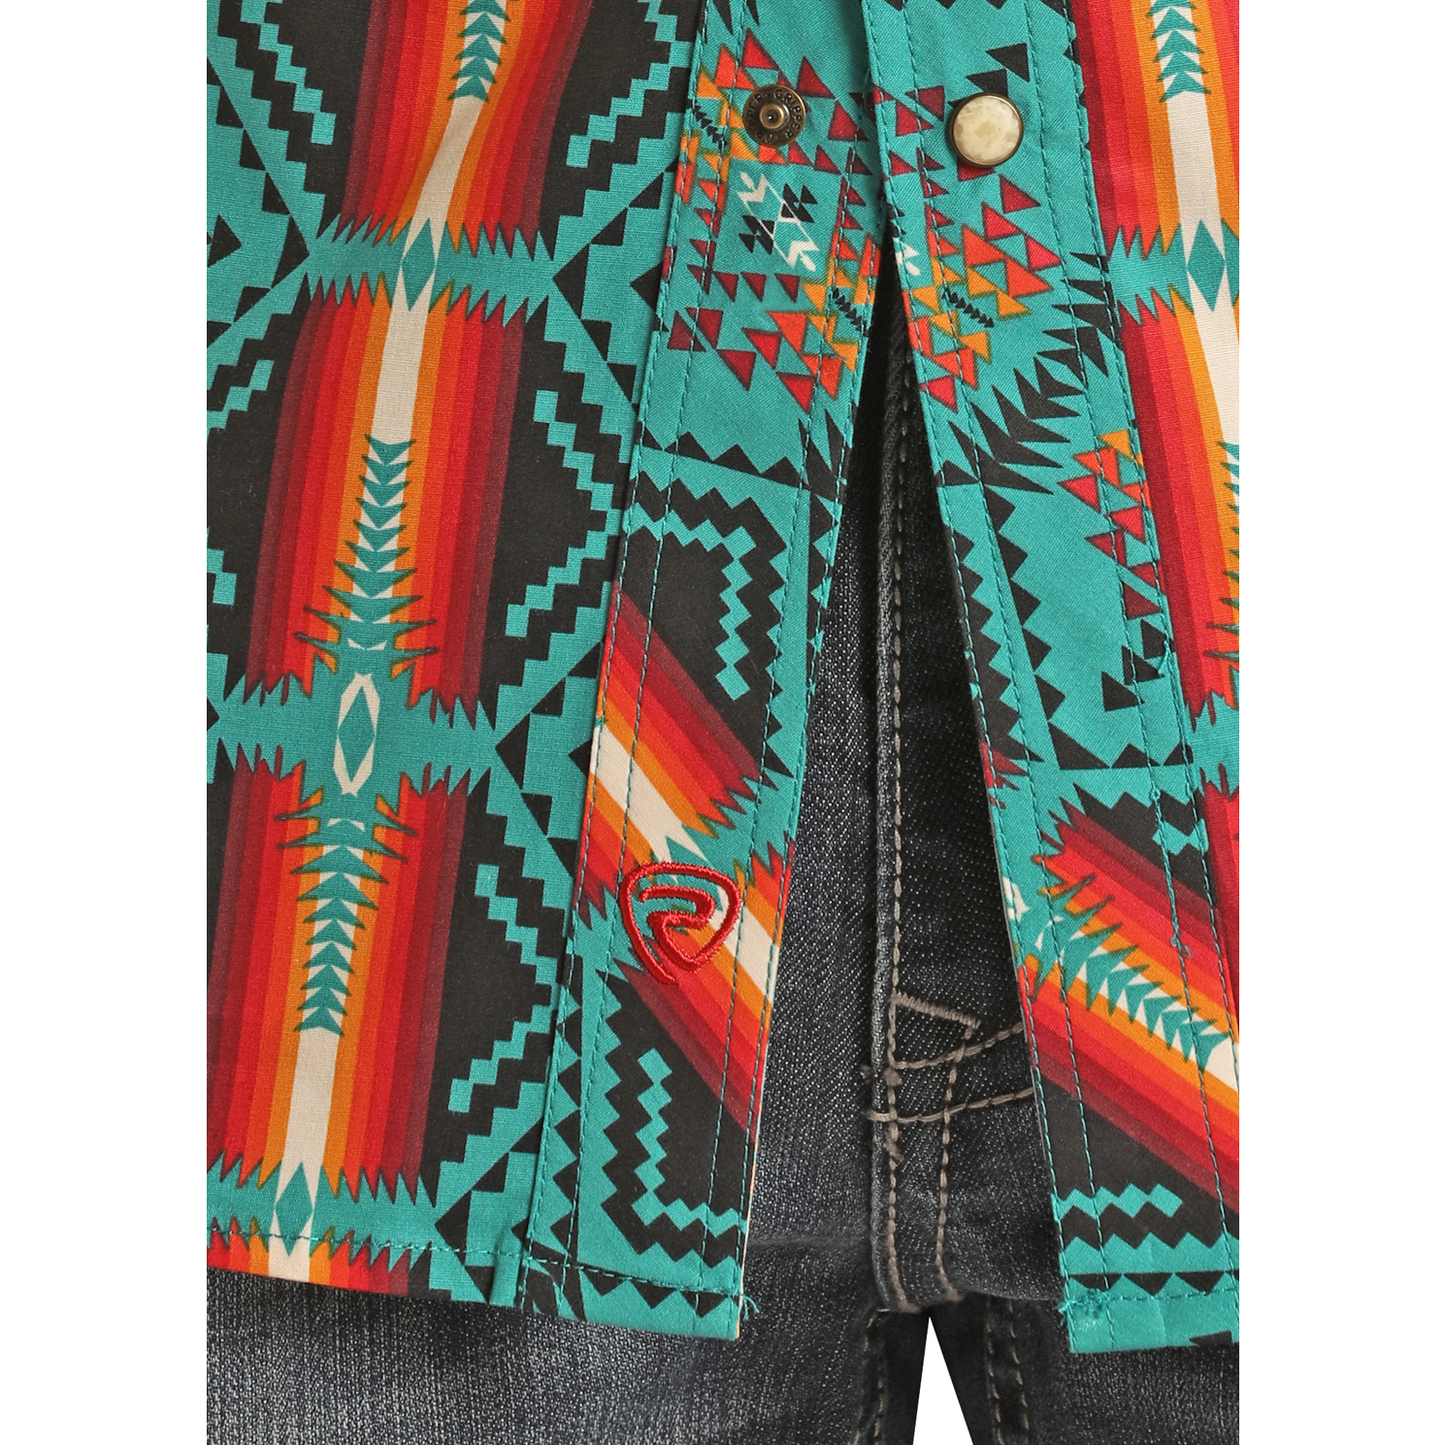 Rock & Roll® Men's Teal Aztec Poplin Print Snap Shirt RRMSOSRZ15-81